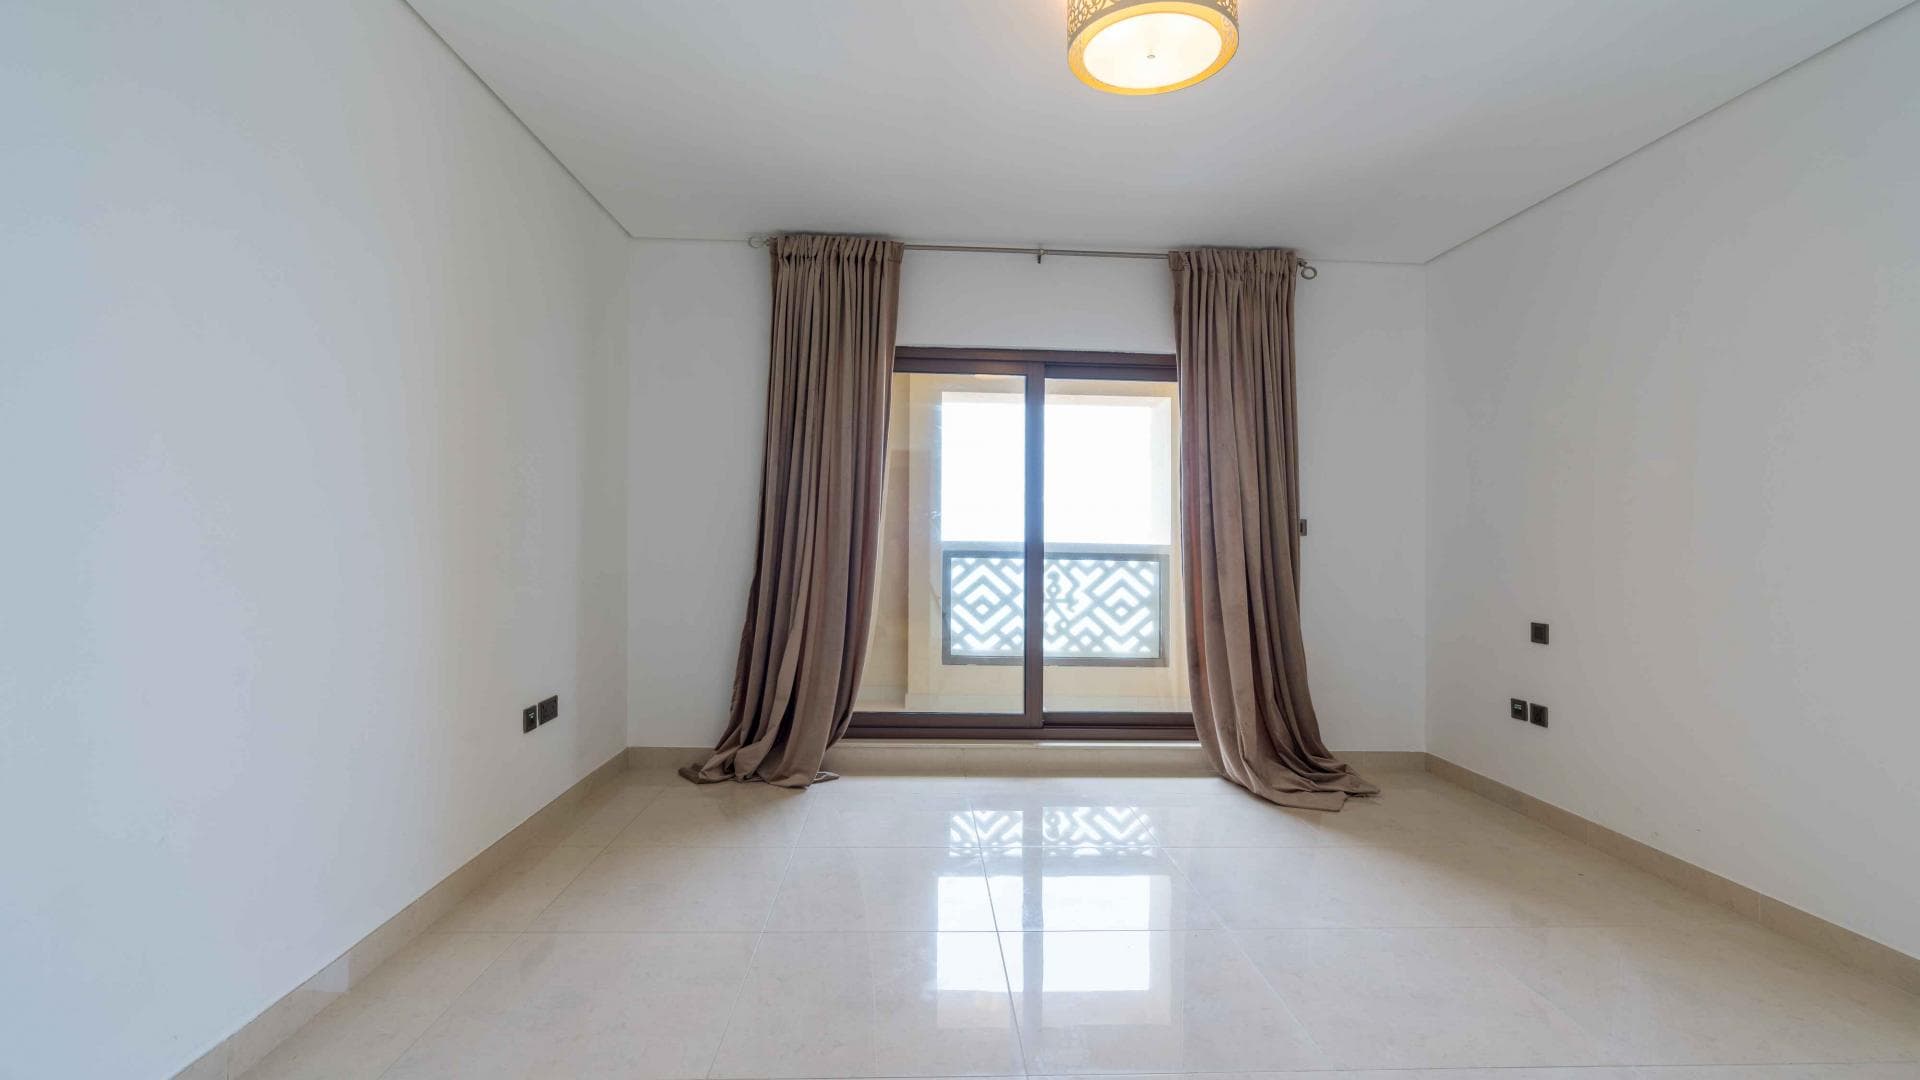 3 Bedroom Apartment For Rent Grand Residence Lp37447 C366ce4483c3800.jpg